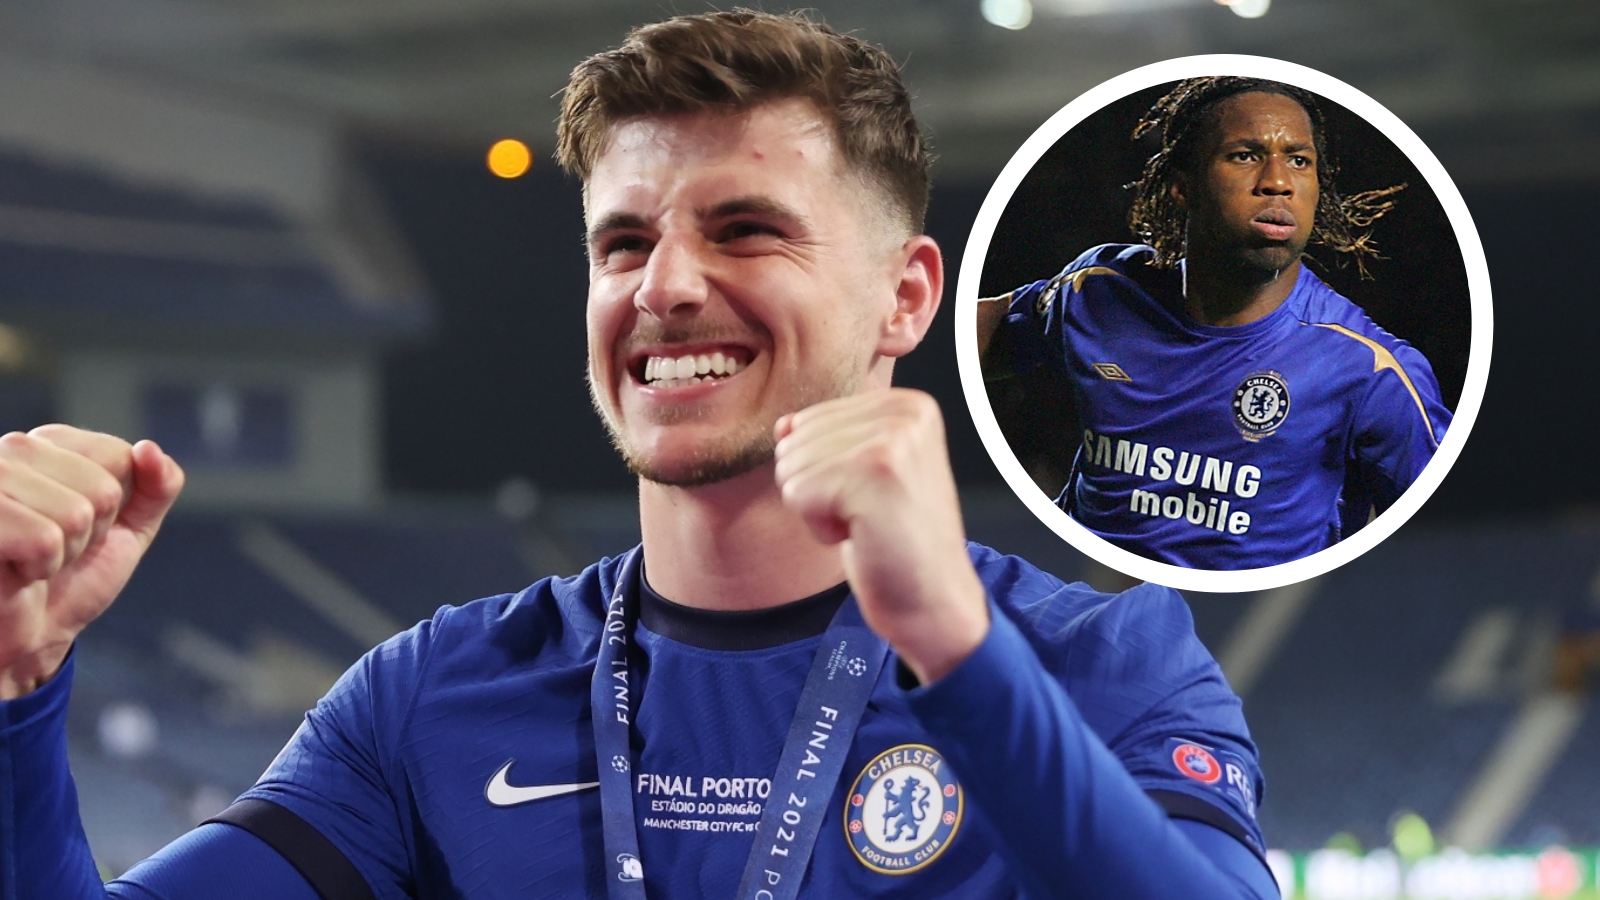 ‘I love you son’ – Chelsea legend Drogba reacts to Mount’s Champions League celebration